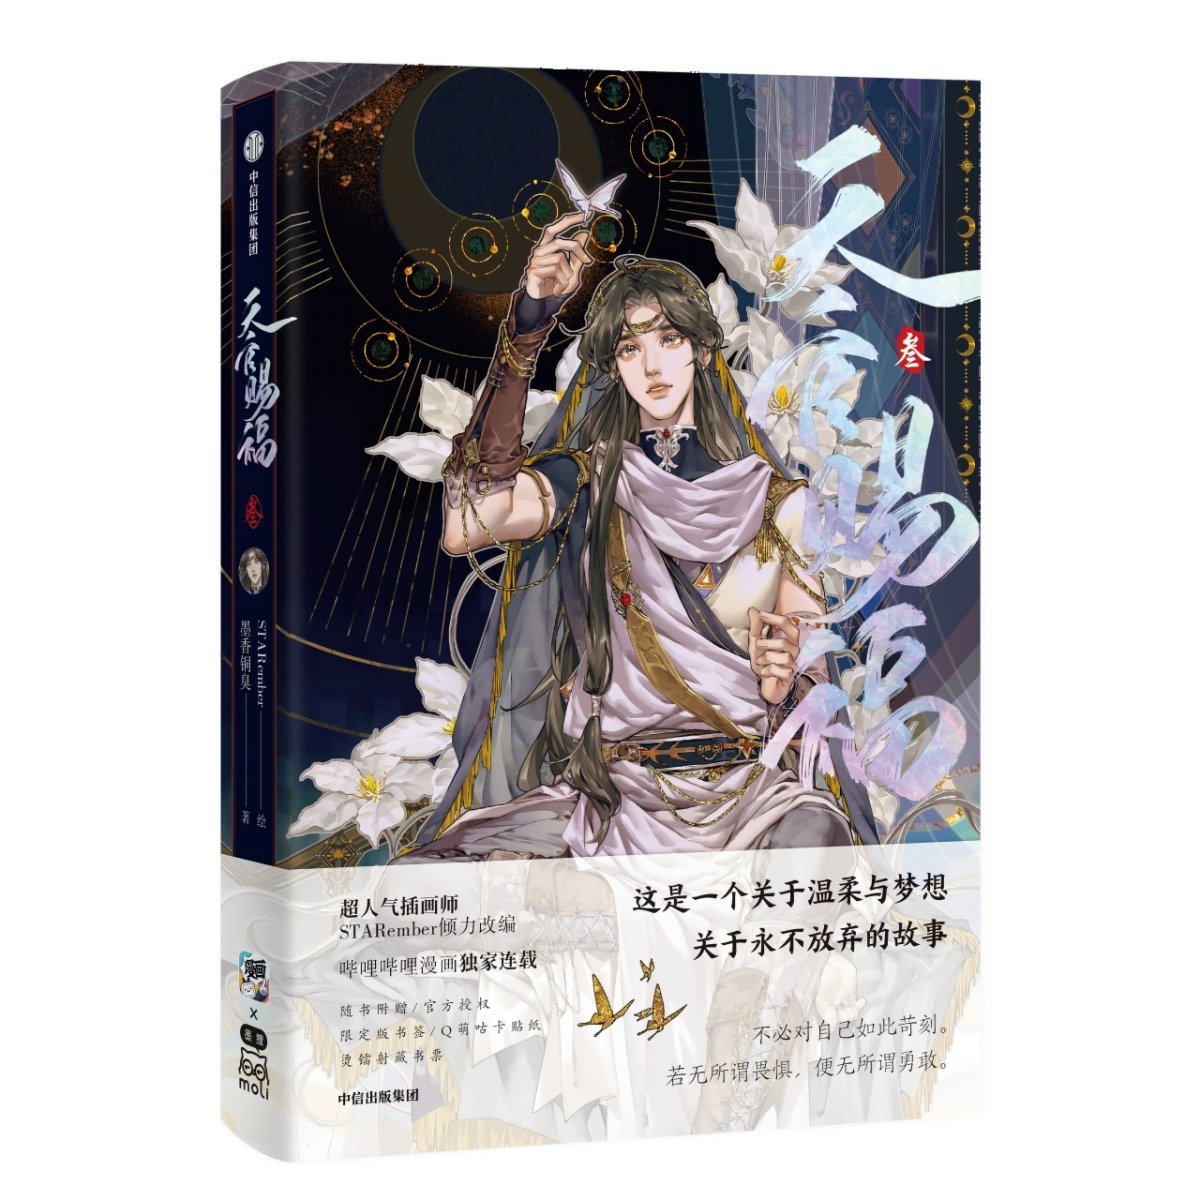 Heaven Official's Blessing: Tian Guan Ci Fu (Novel) Vol. 3 by Mò